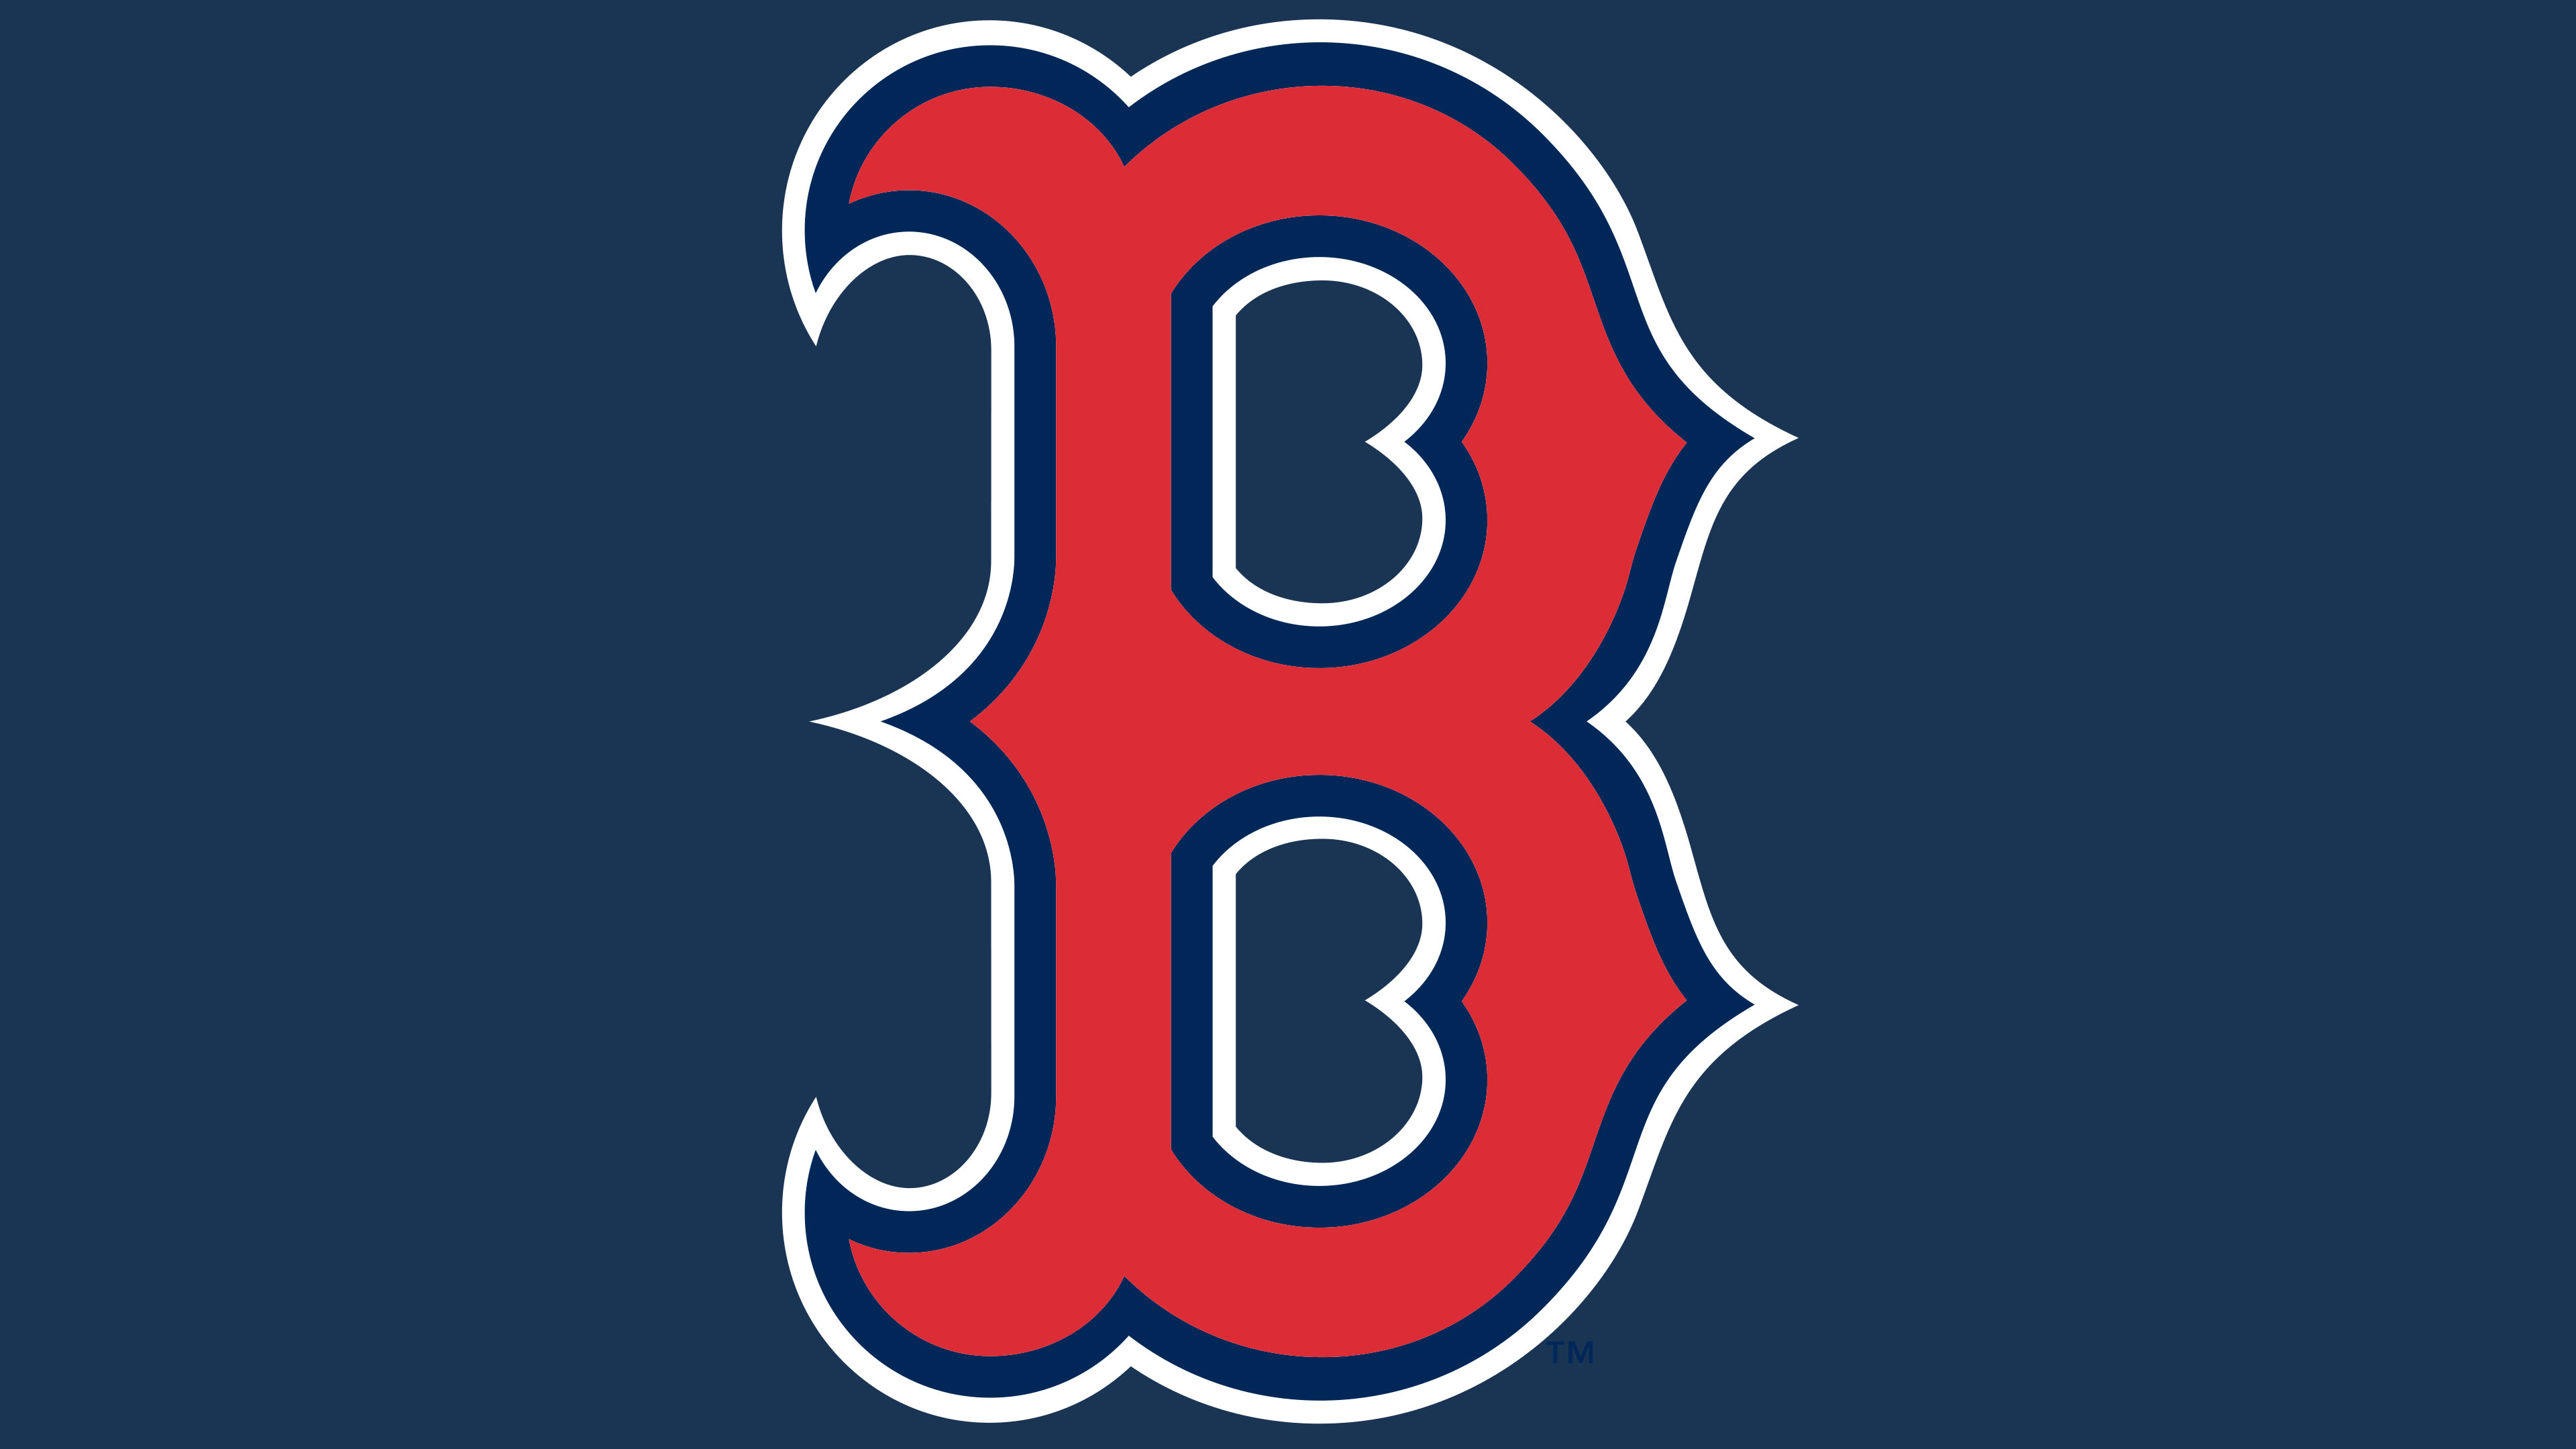 boston-red-sox-logo-valor-hist-ria-png